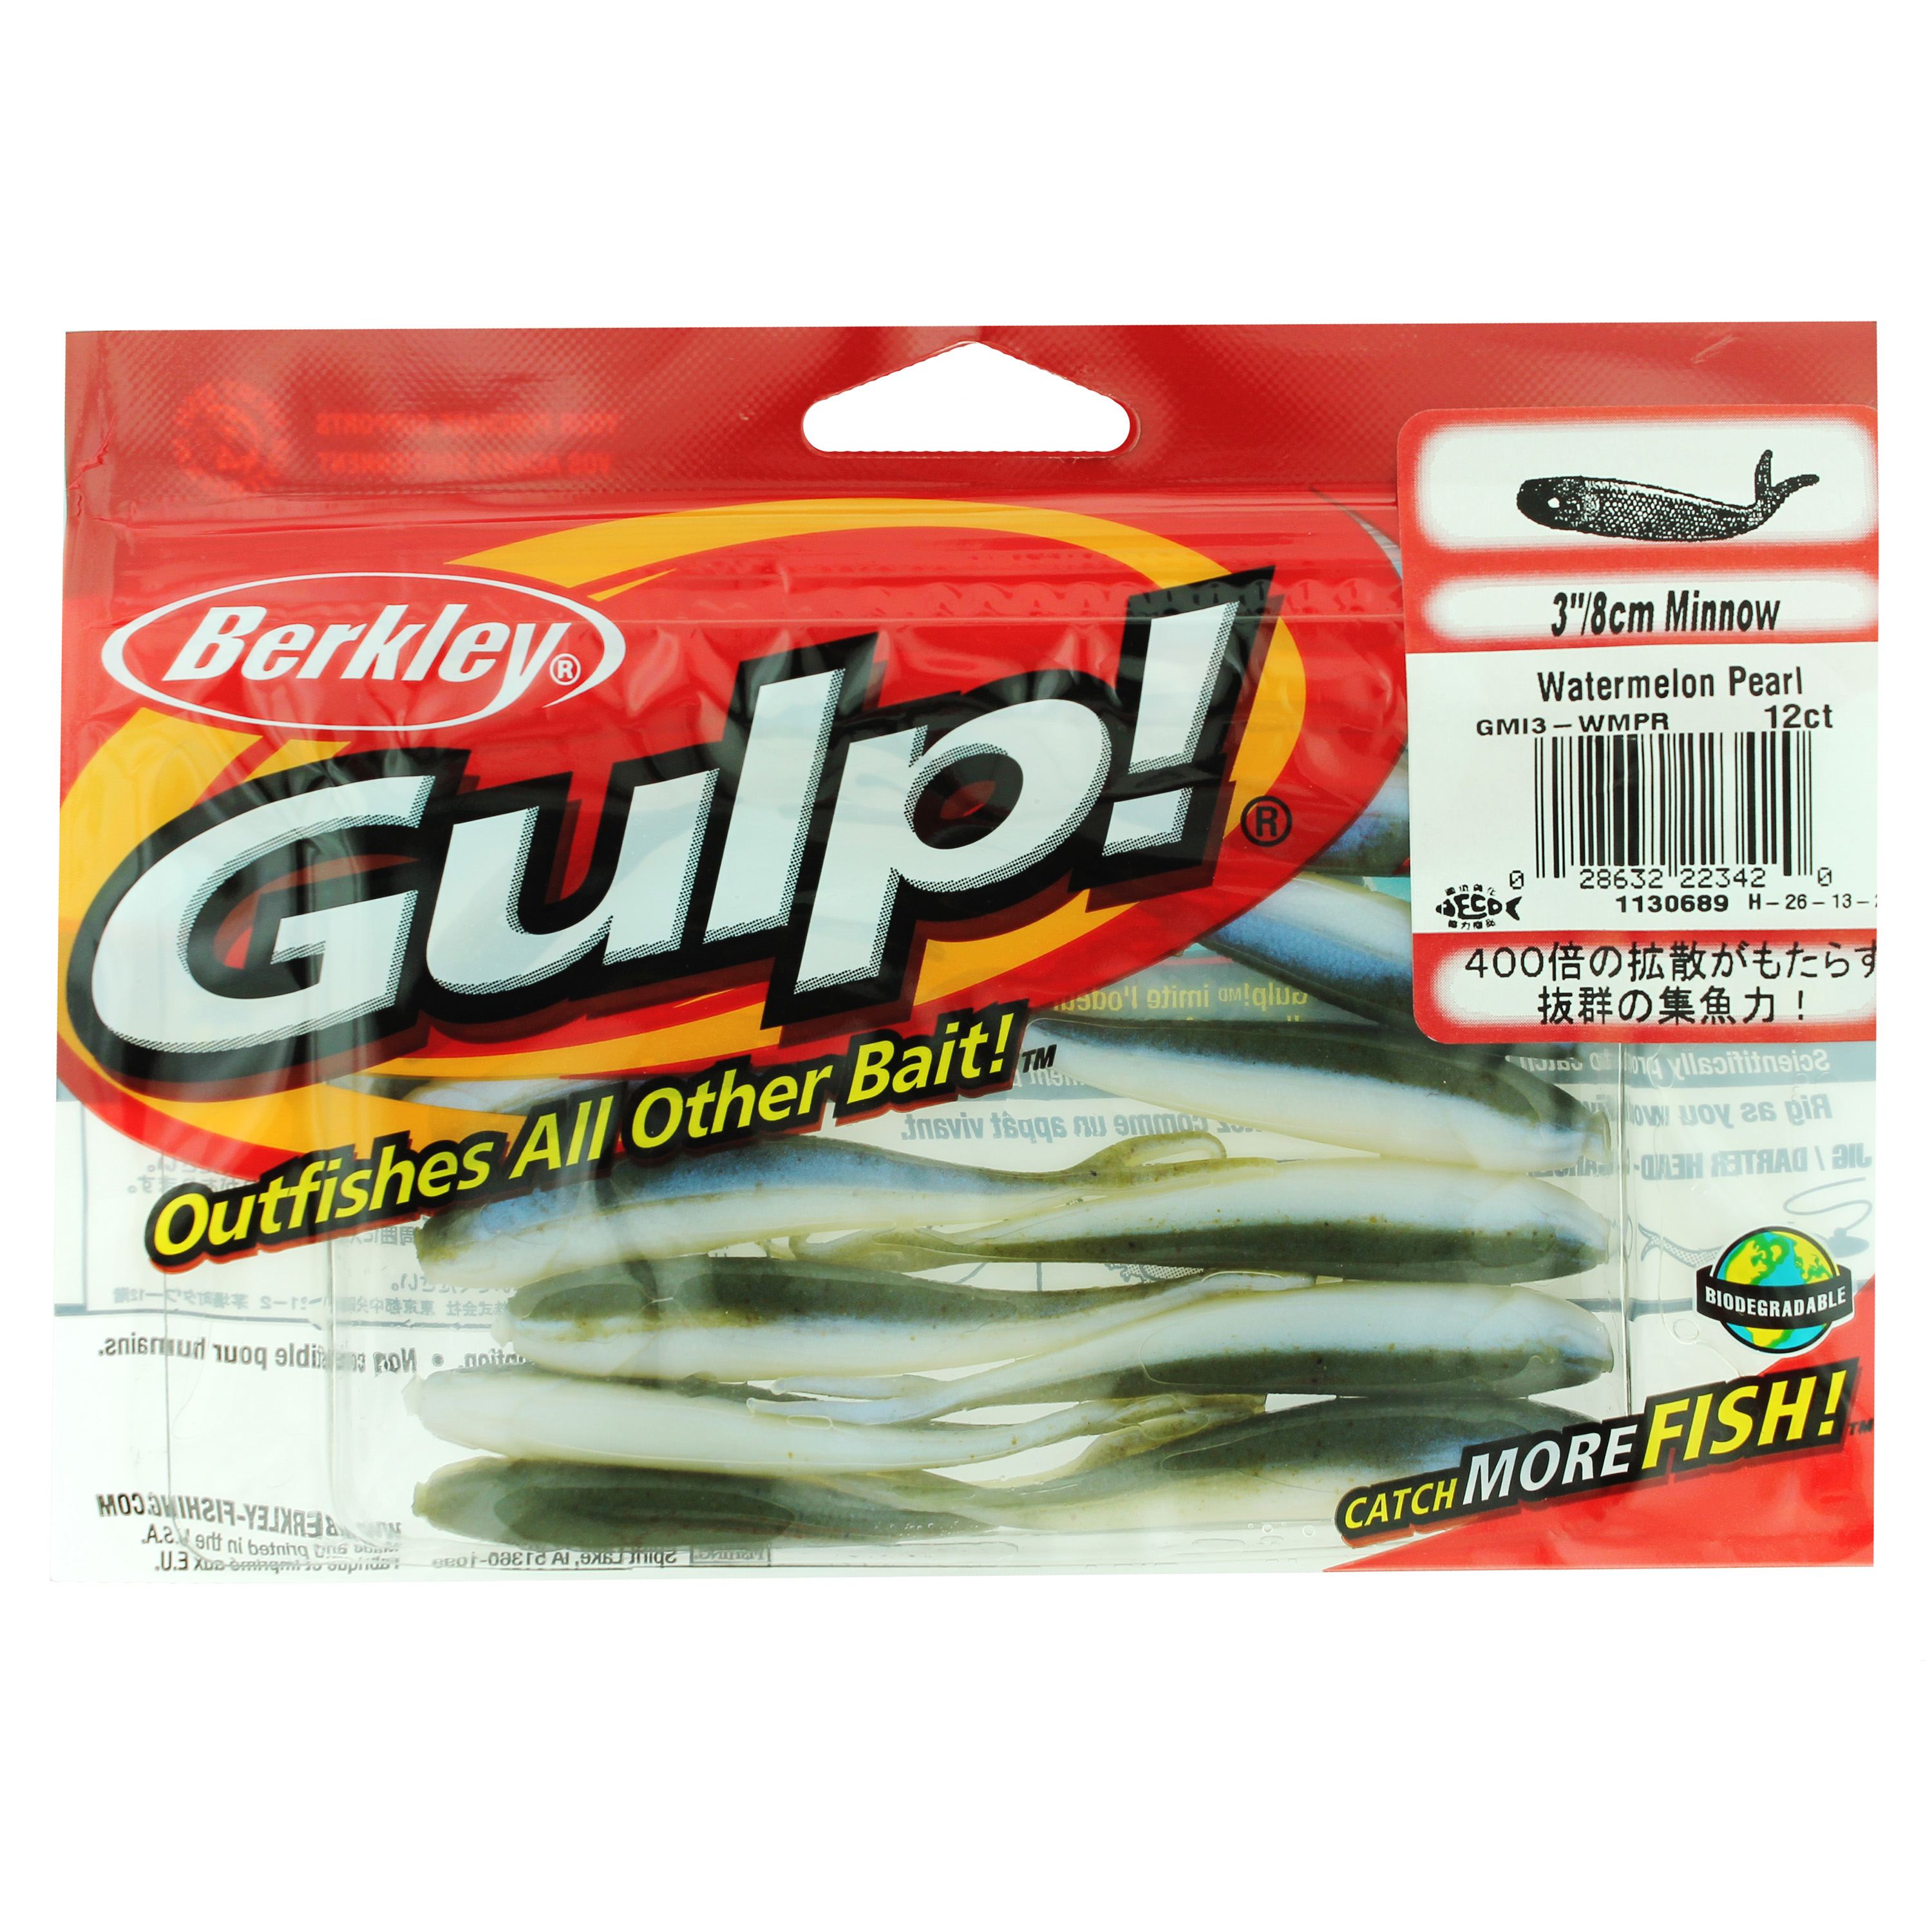 Berkley Gulp! Minnow Soft Bait - image 1 of 7